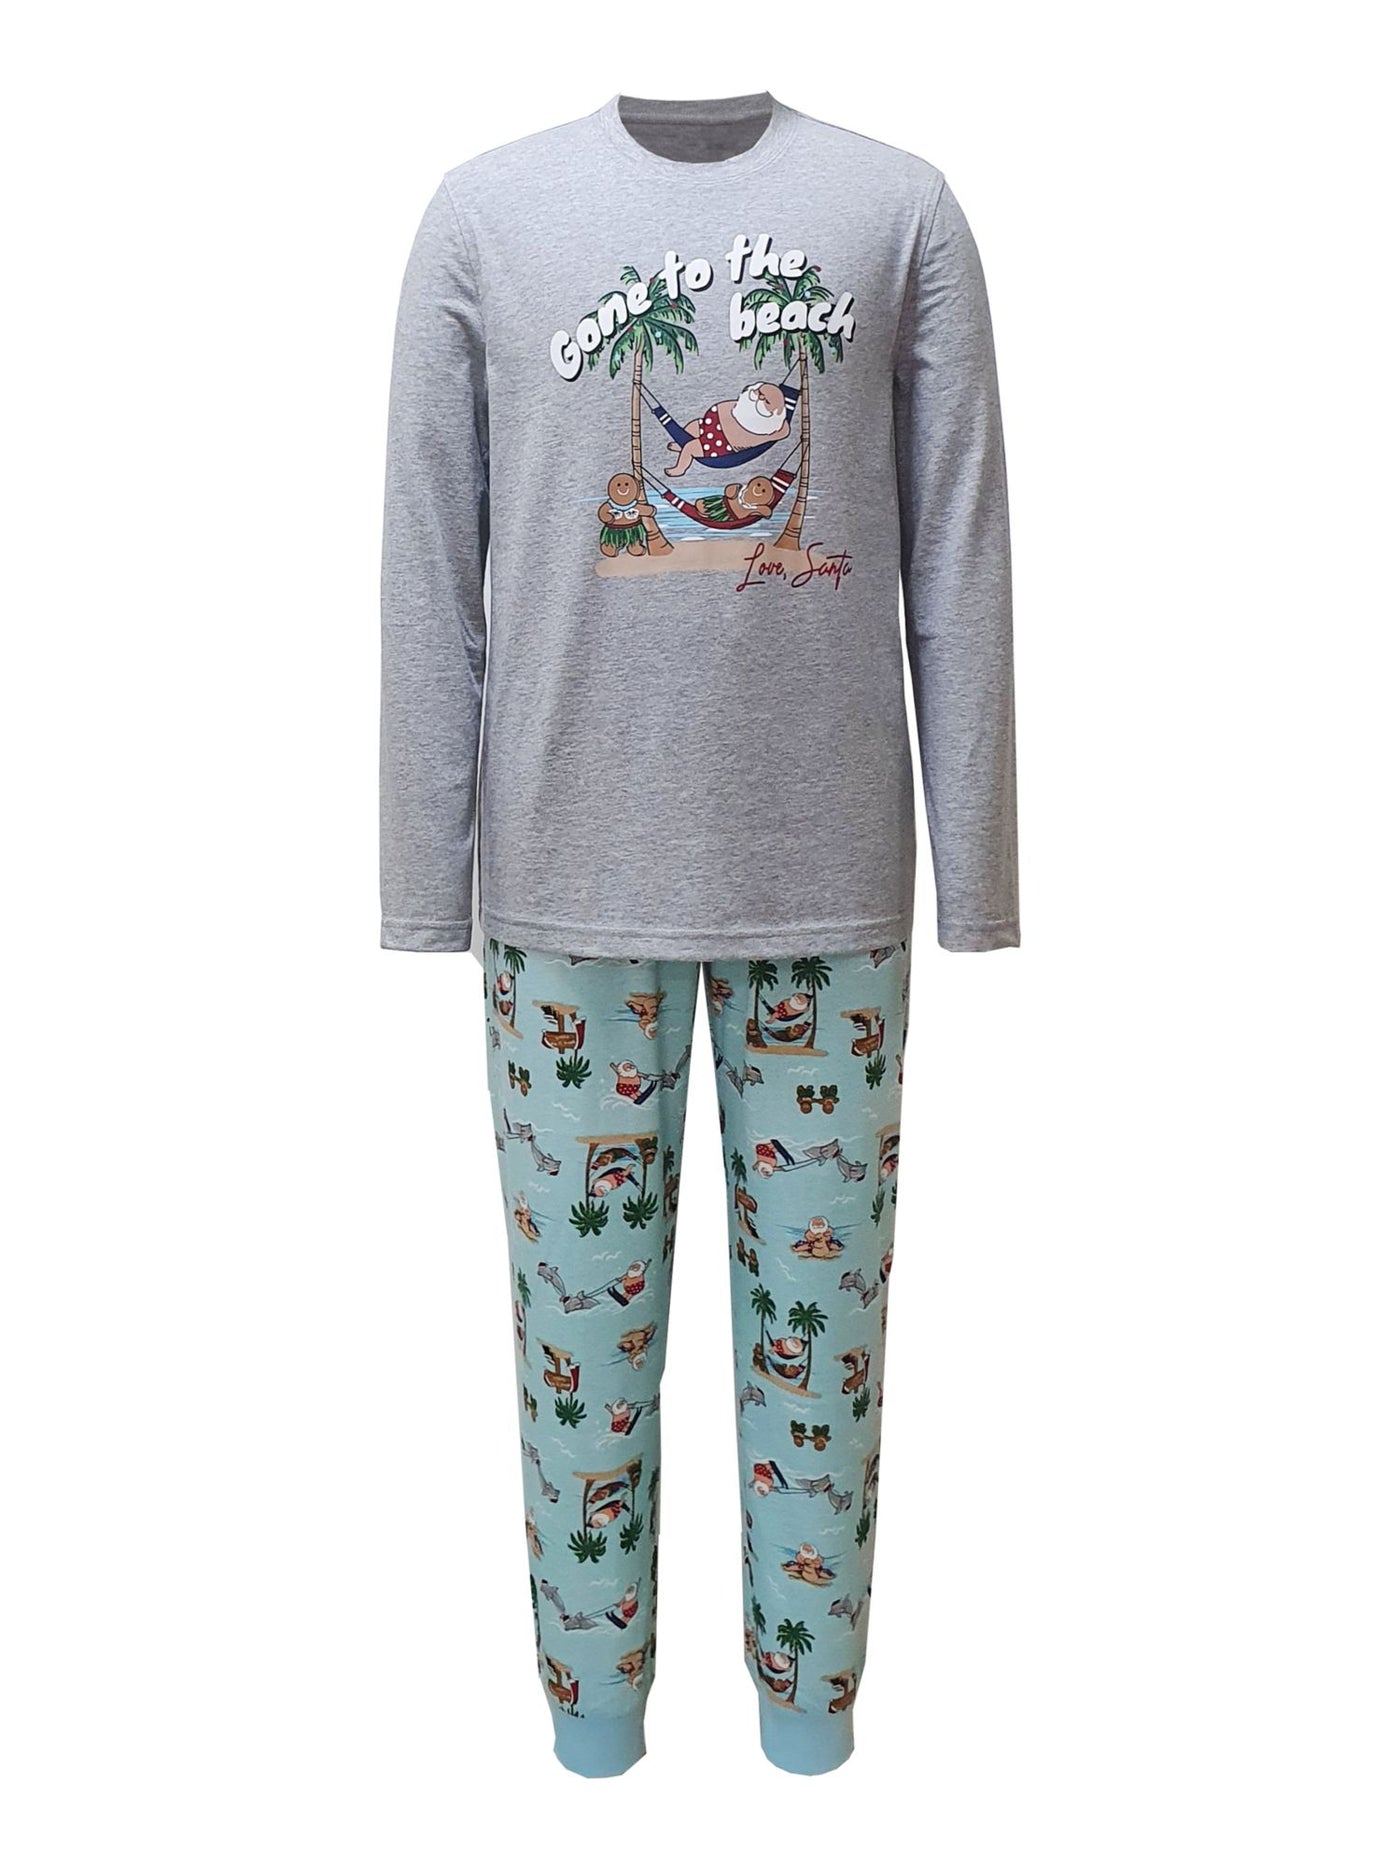 FAMILY PJs Mens Gray Graphic T-Shirt Top Lounge Pants Pajamas XXL